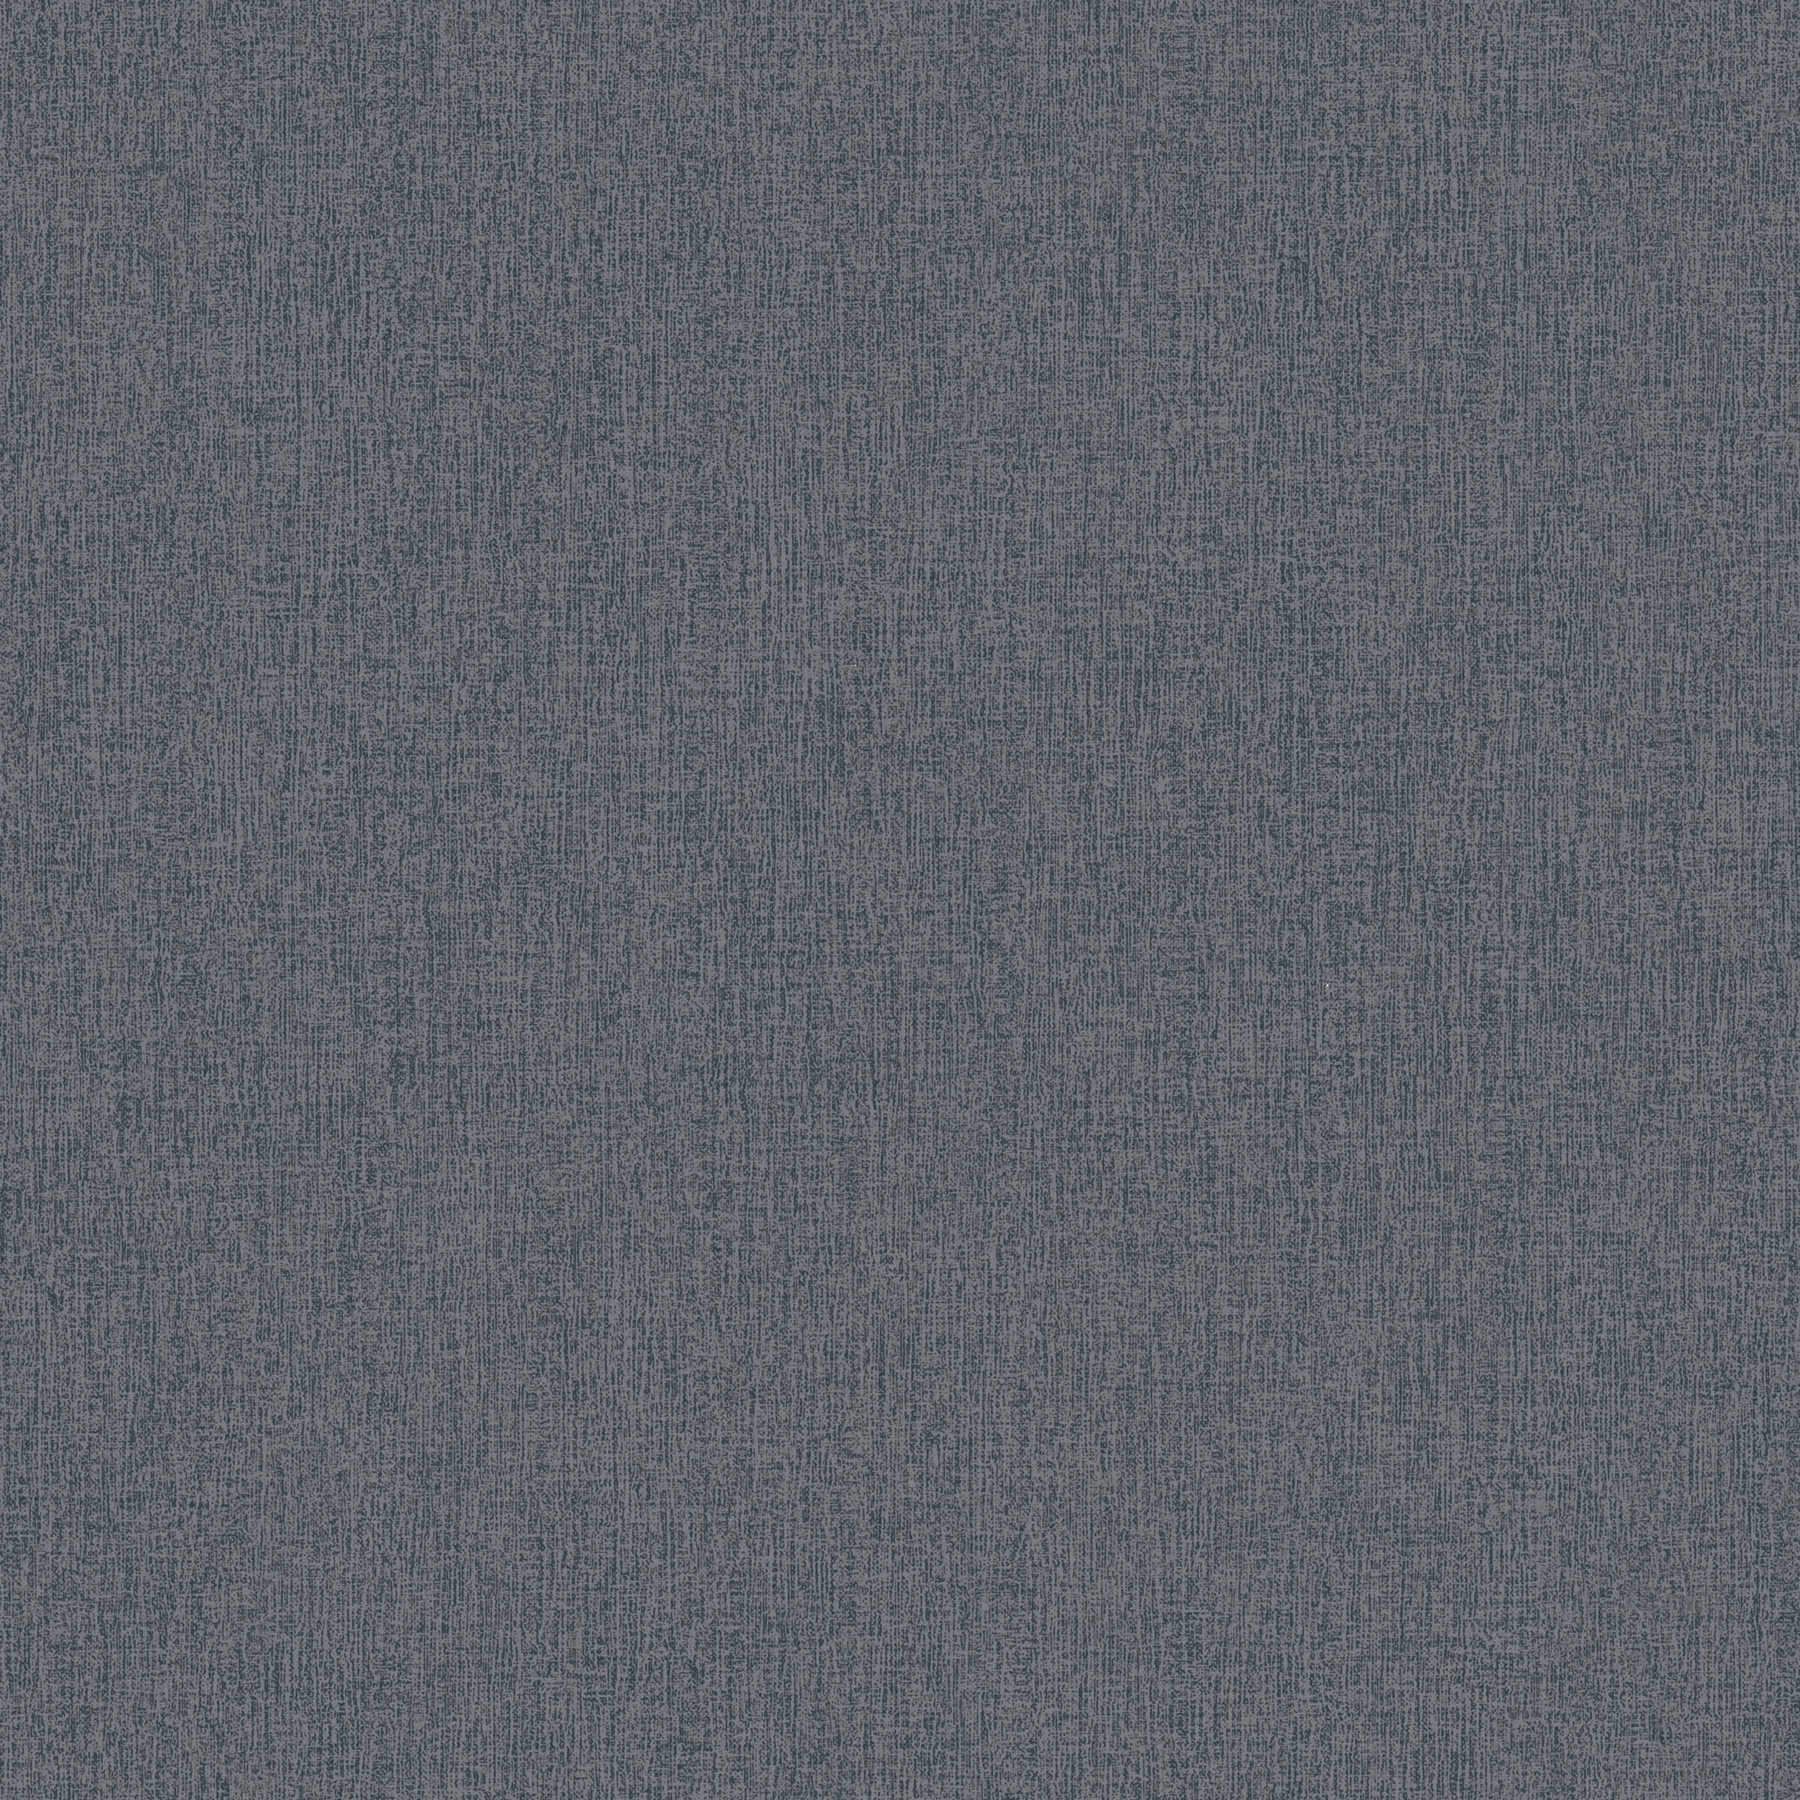 Wallpaper linen look, plain & mottled - grey
